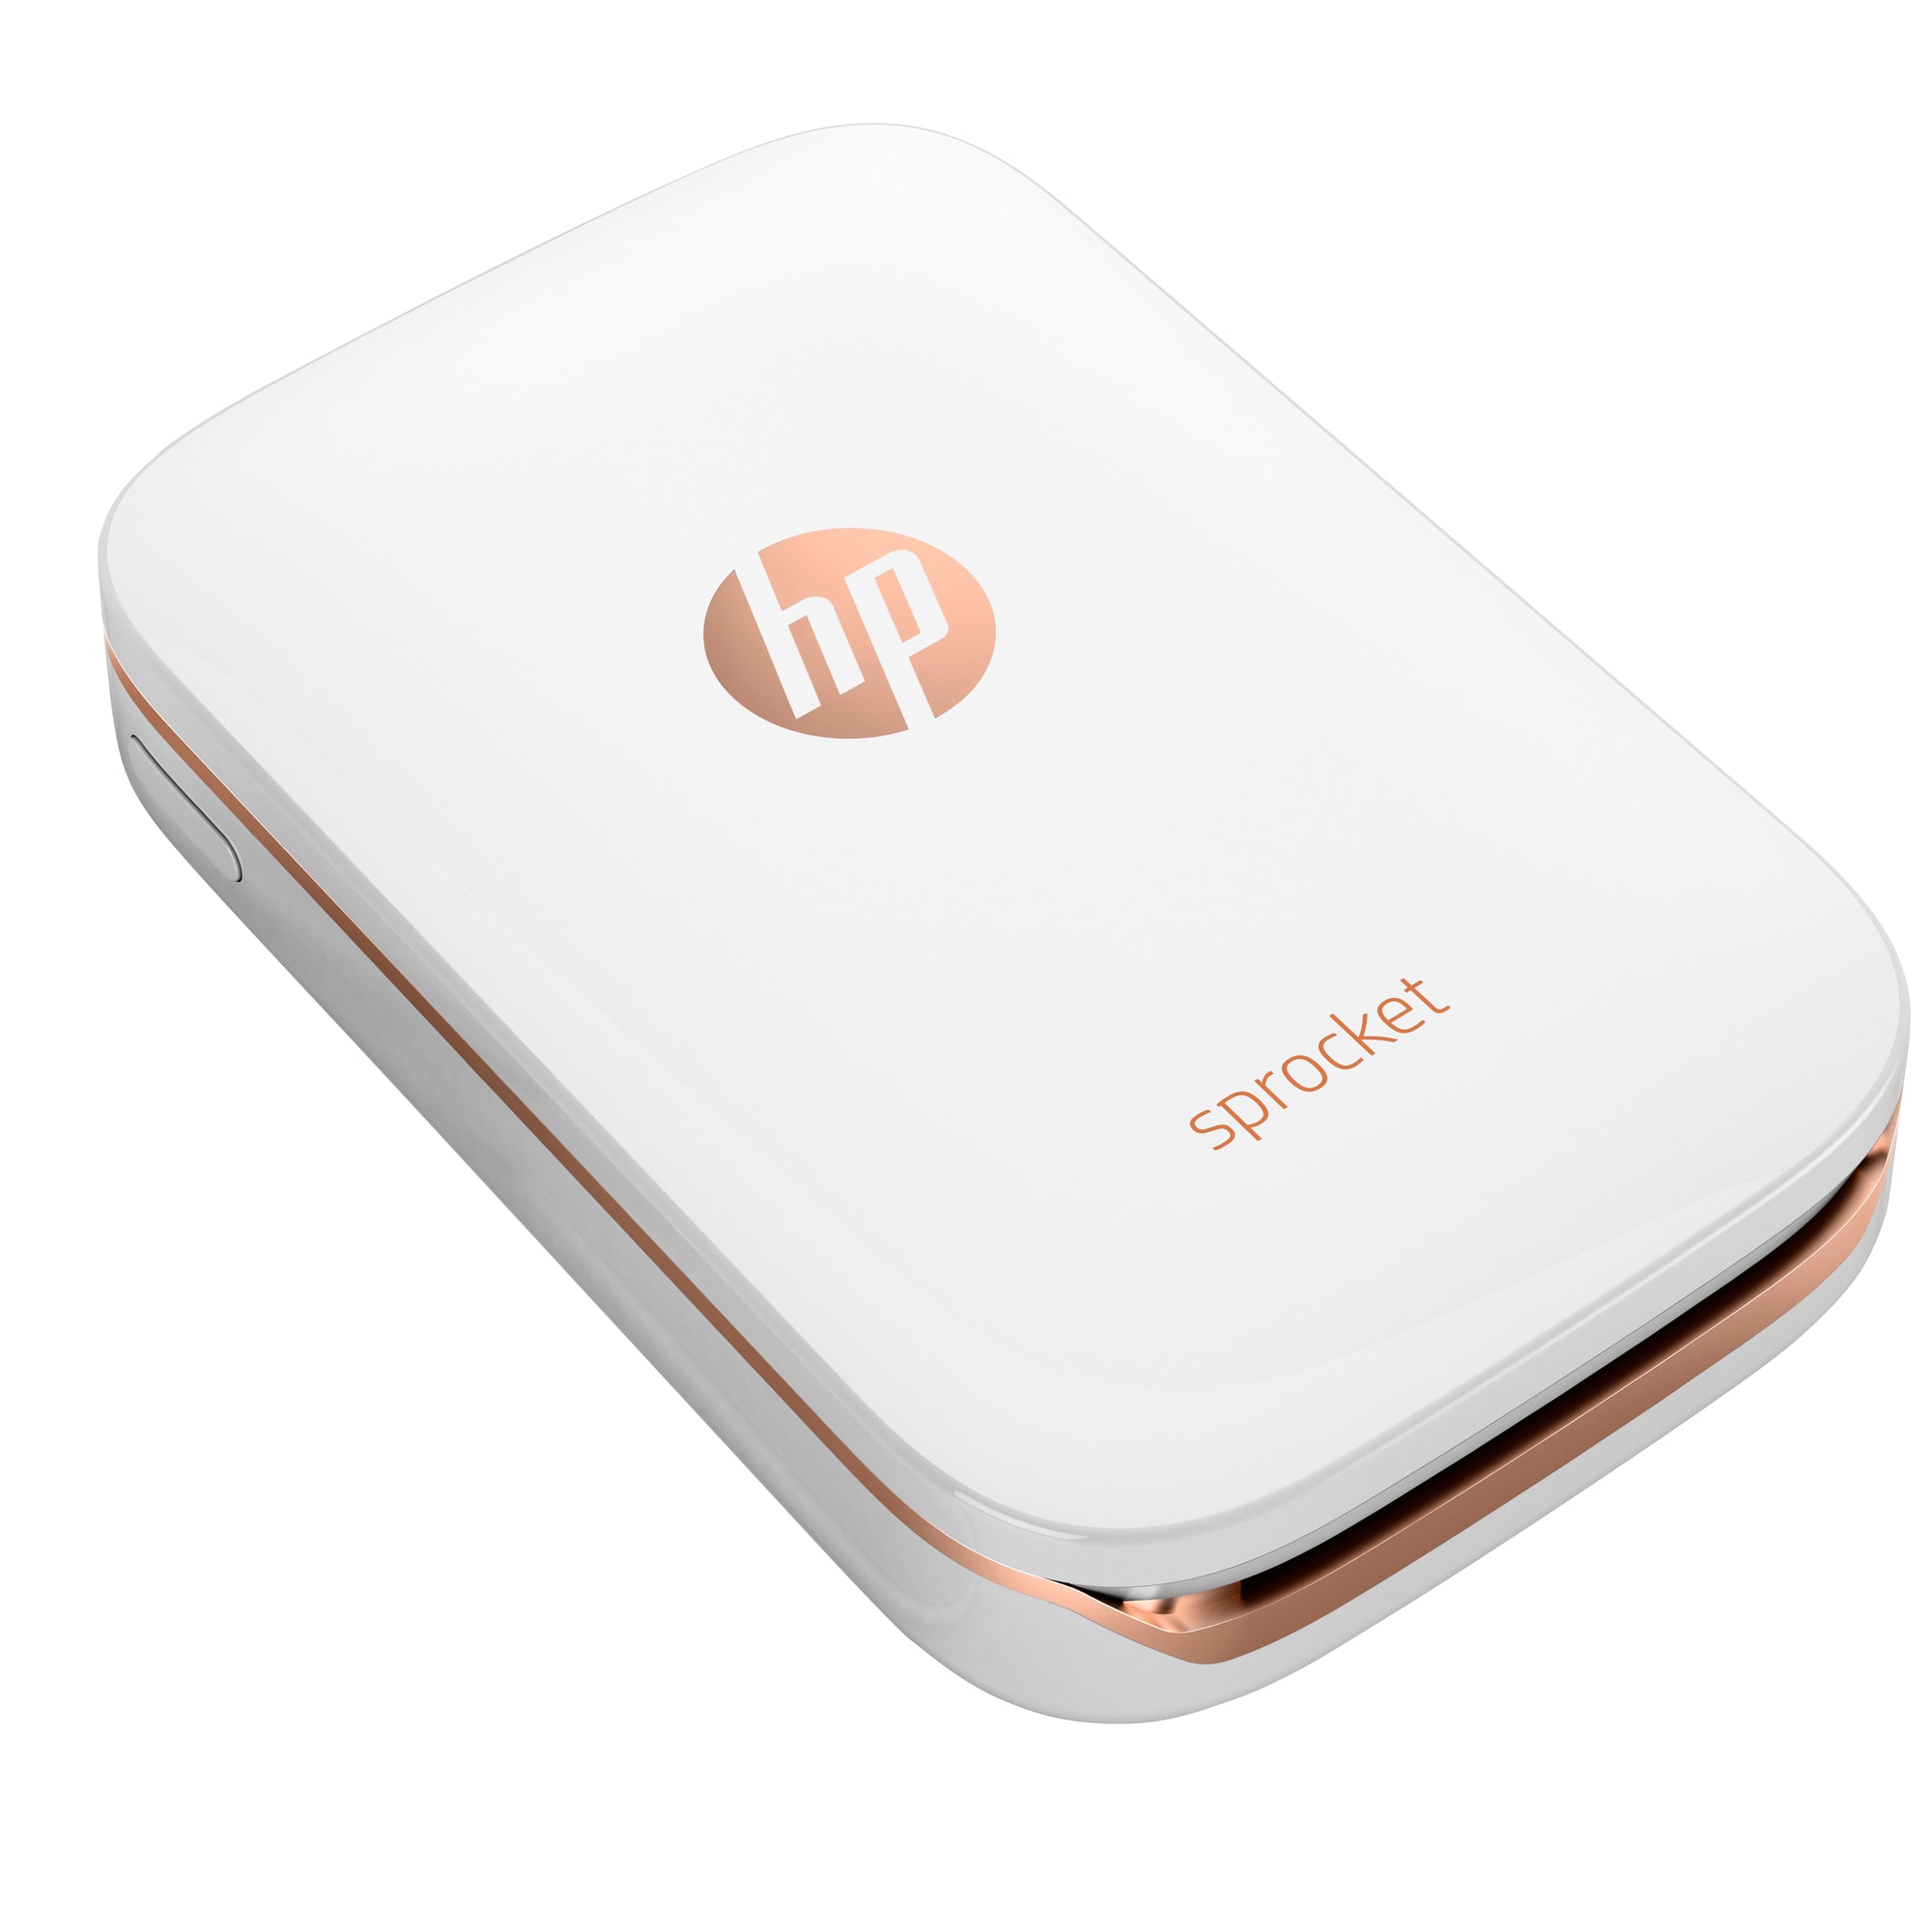 HP Sprocket mobil fotoprinter (hvid) | Elgiganten